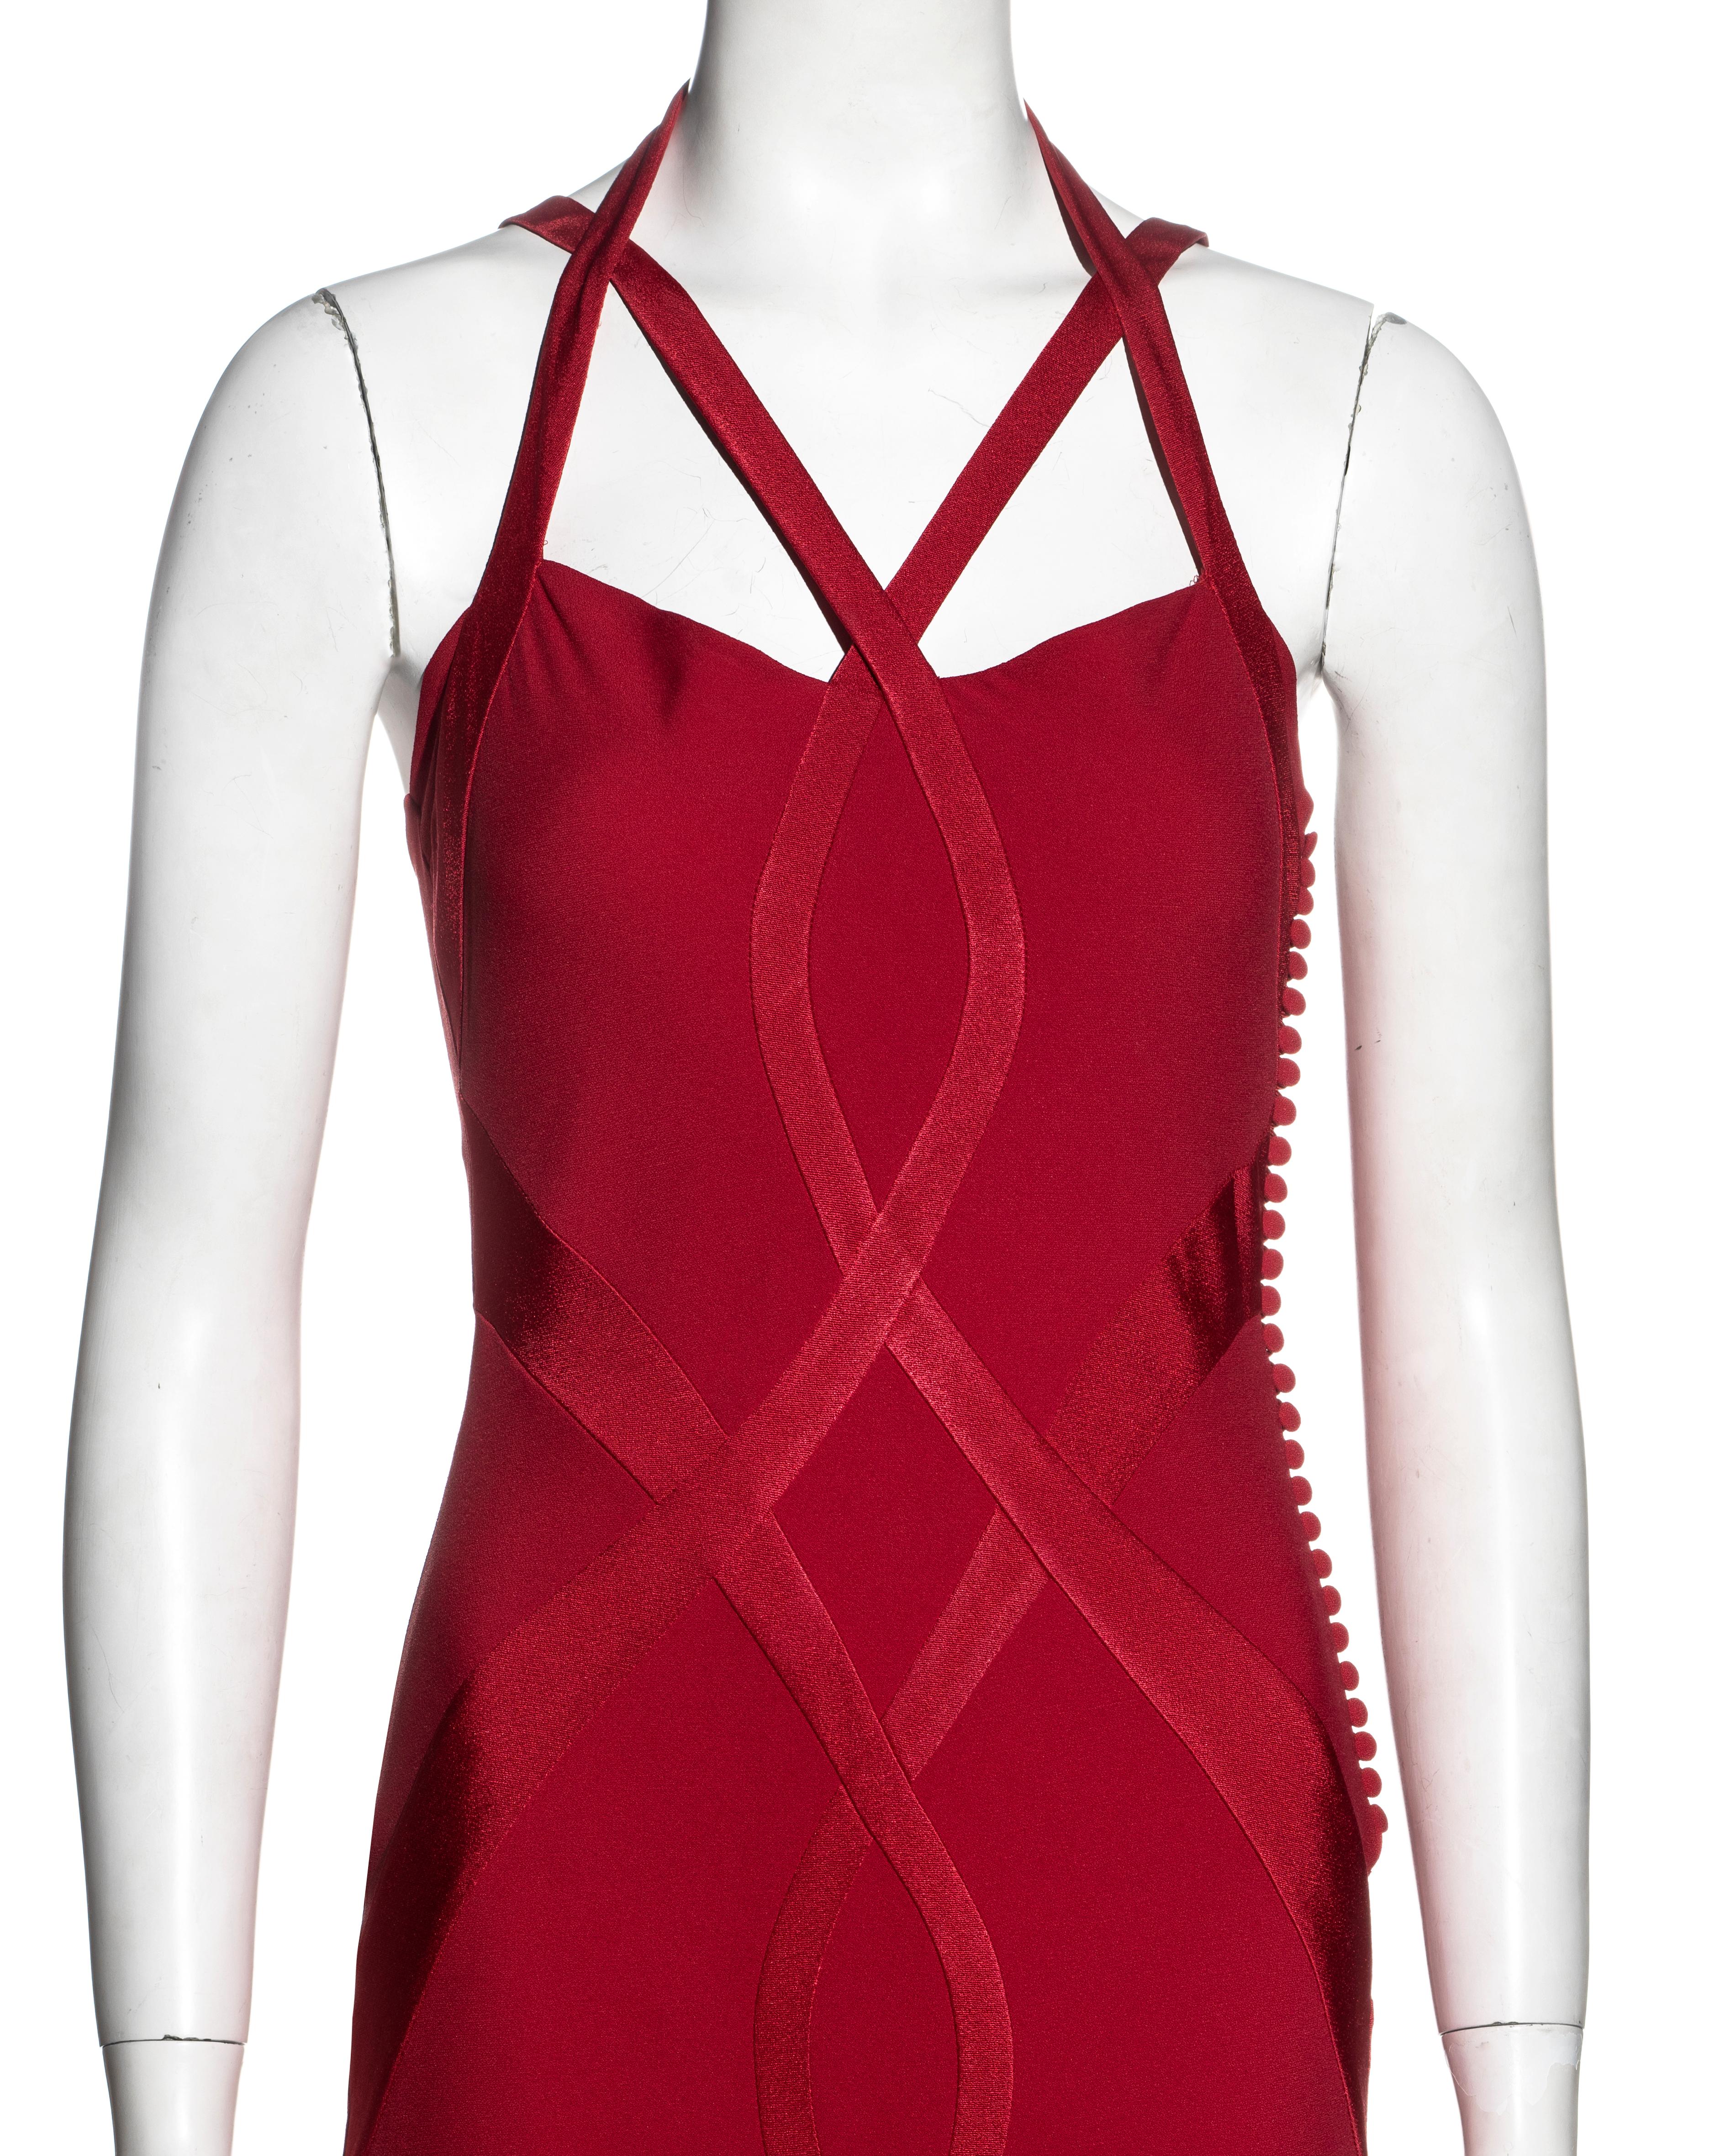 Red Christian Dior by John Galliano red bias-cut evening dress, fw 2004